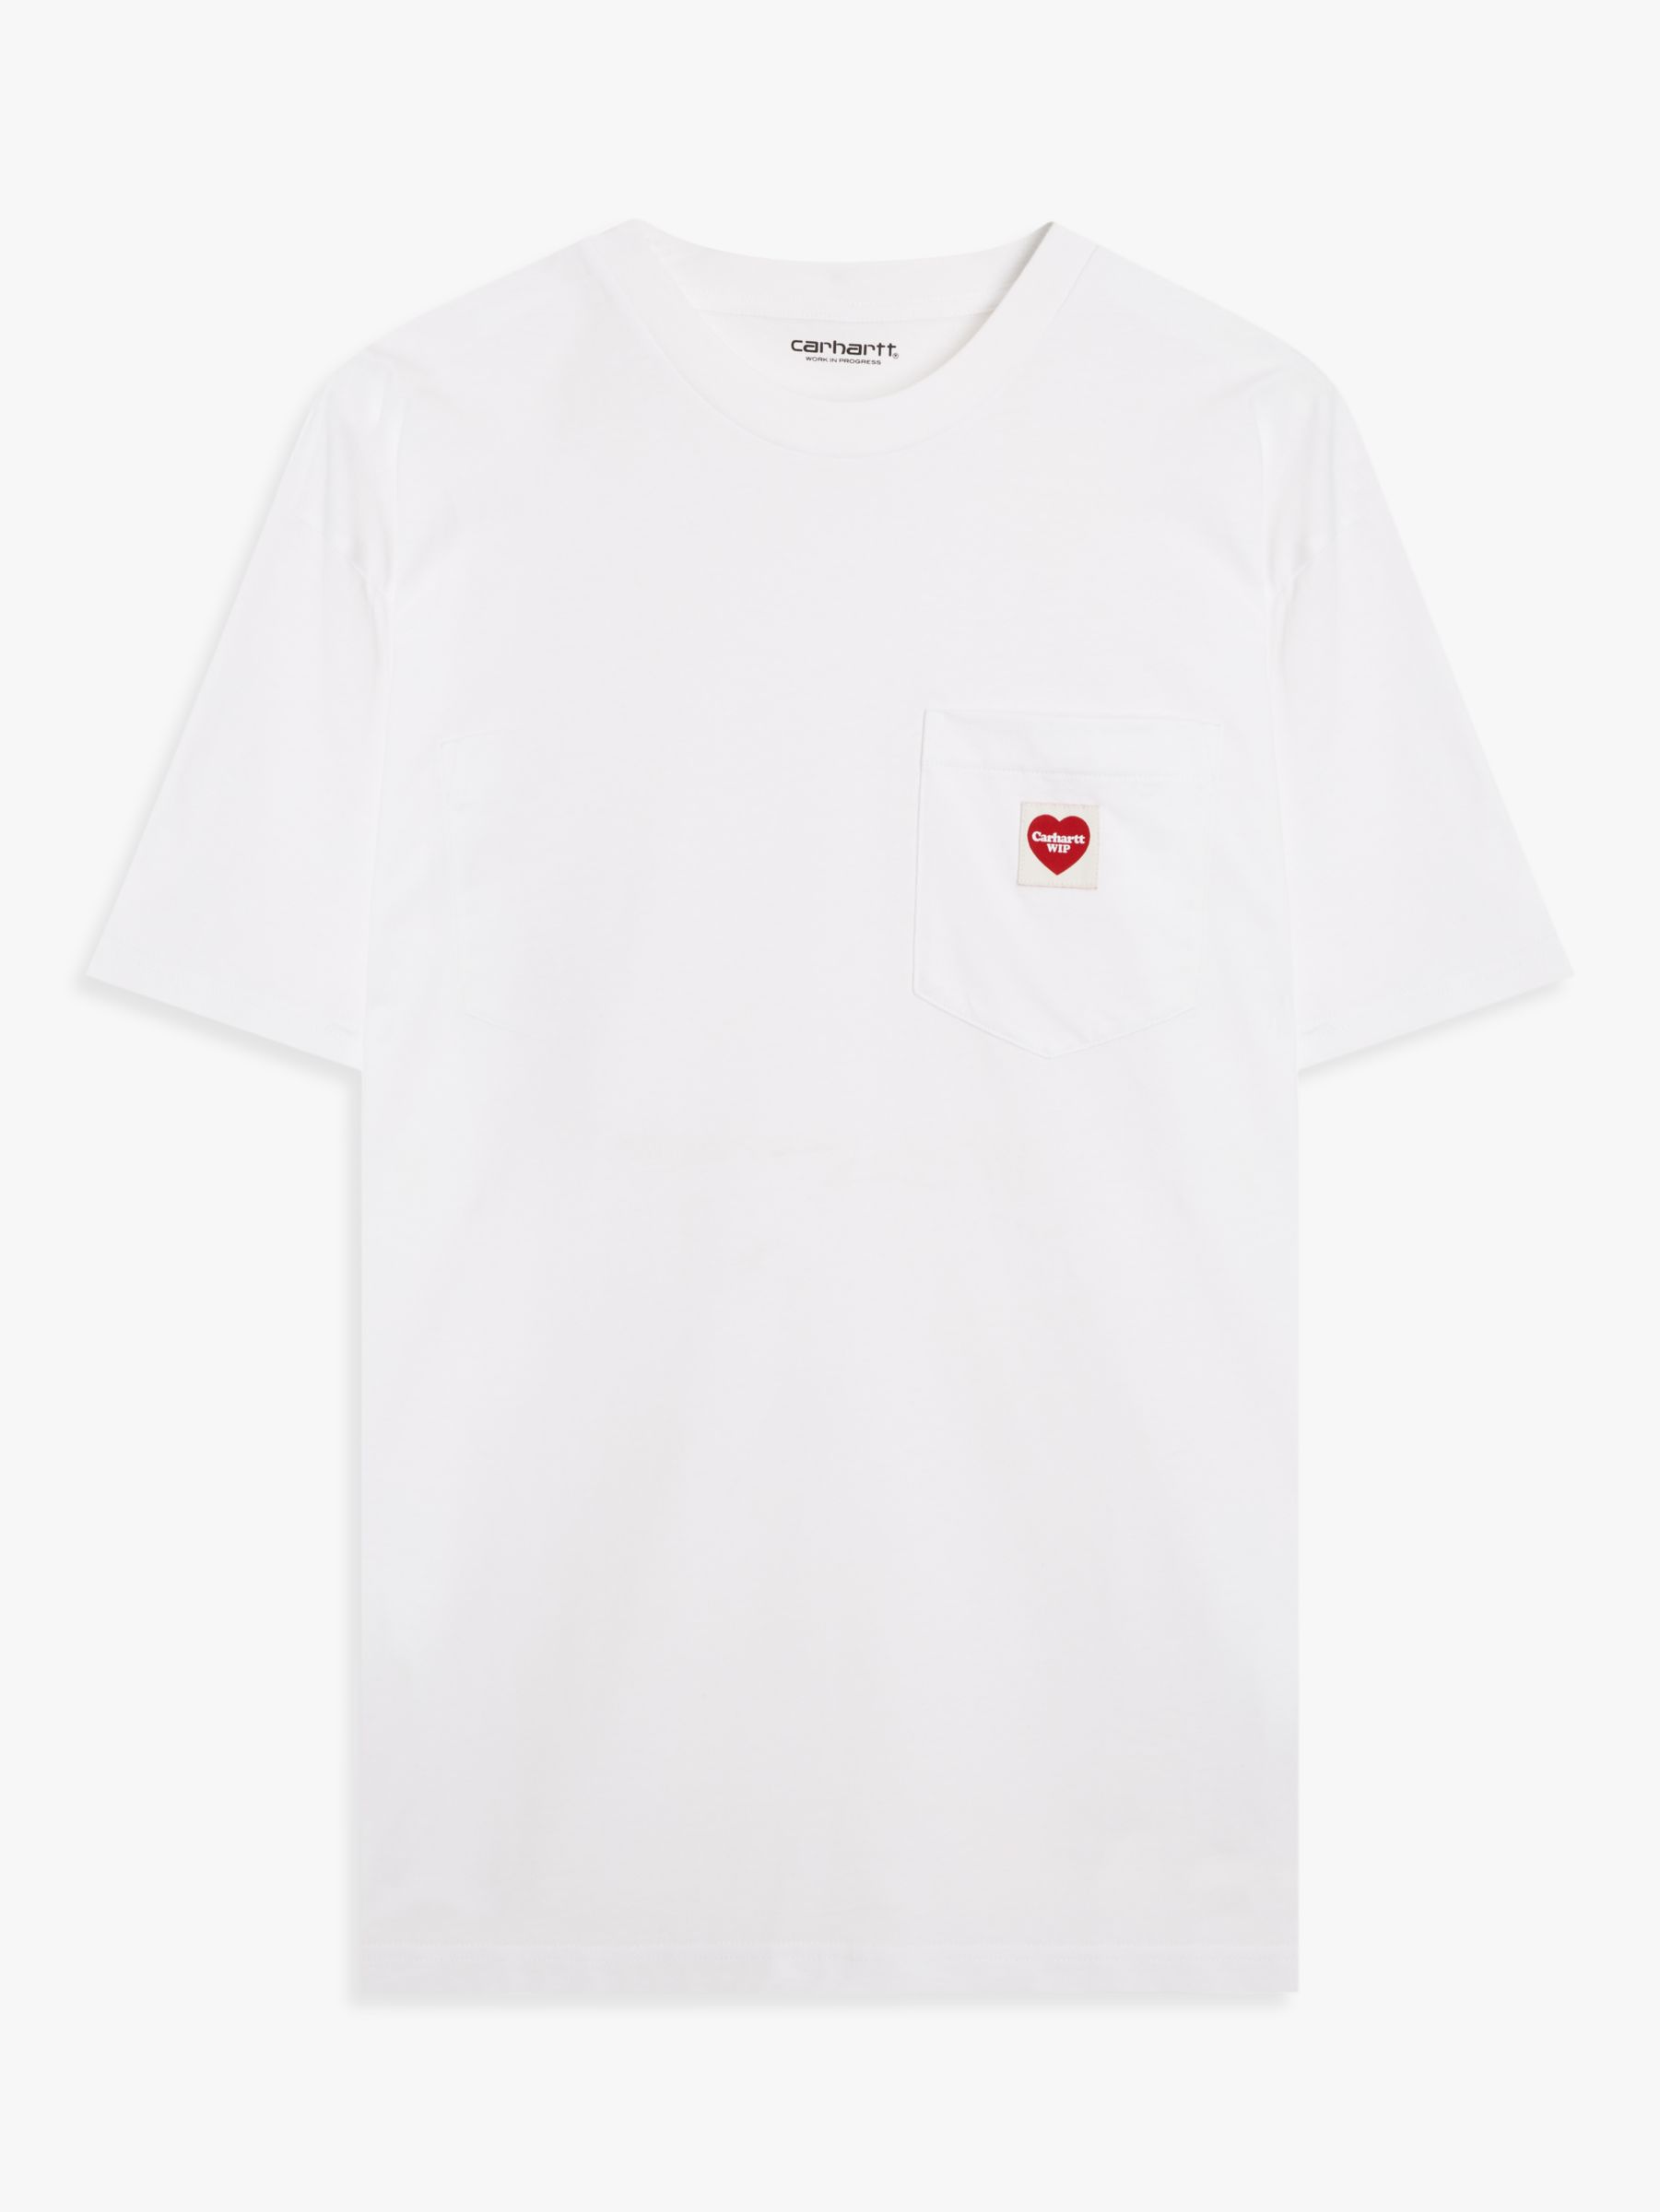 Carhartt WIP Pocket Heart T-Shirt, White at John Lewis & Partners